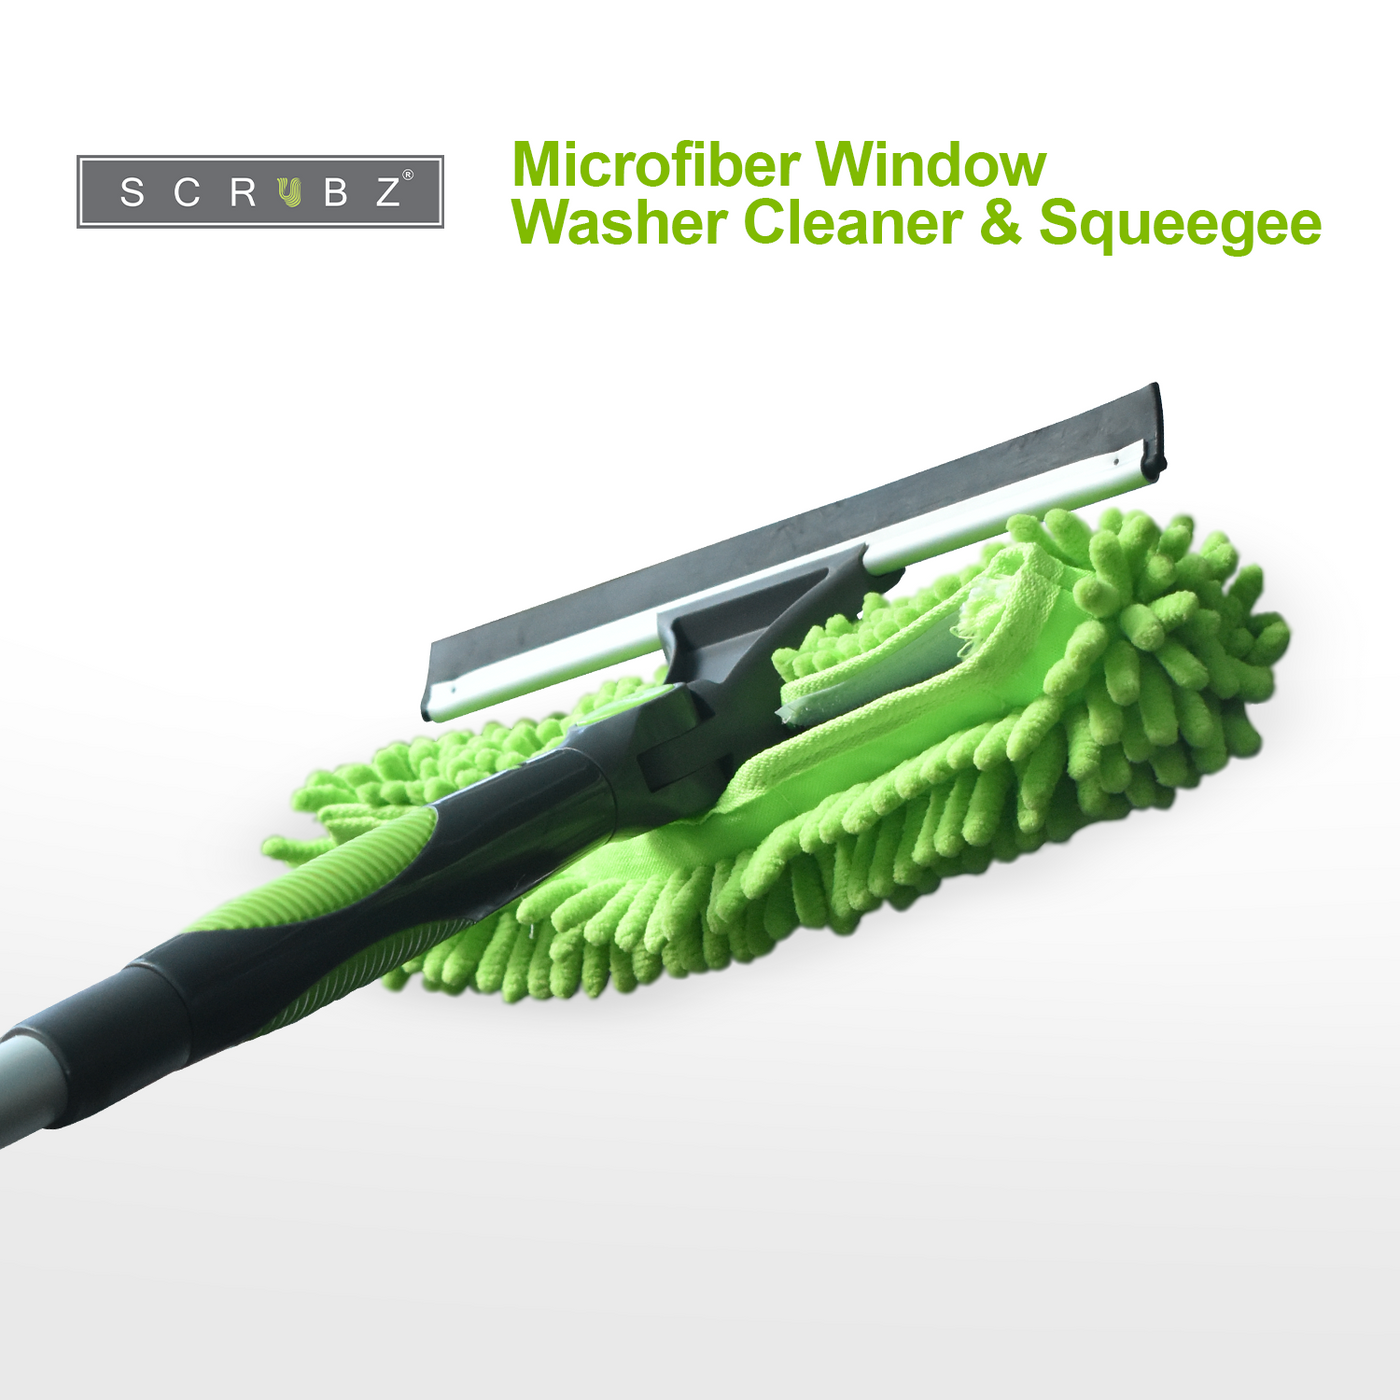 SCRUBZ Microfiber Window Washer Cleaner and Squeegee